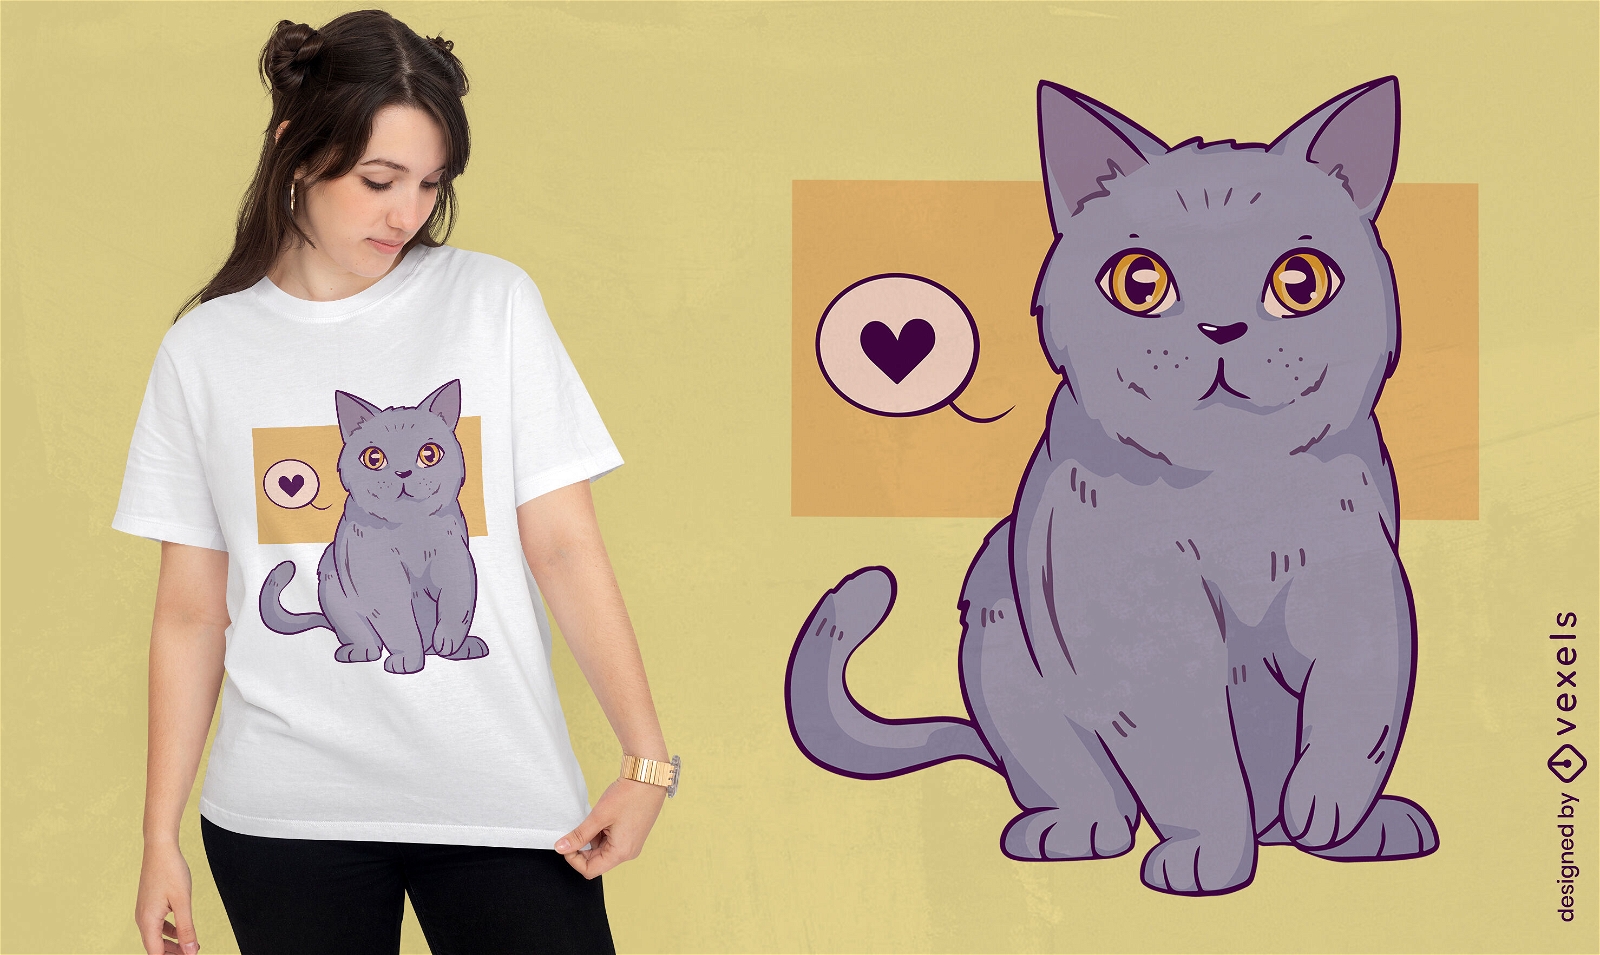 S??es britisches Kurzhaar-Katzen-T-Shirt-Design